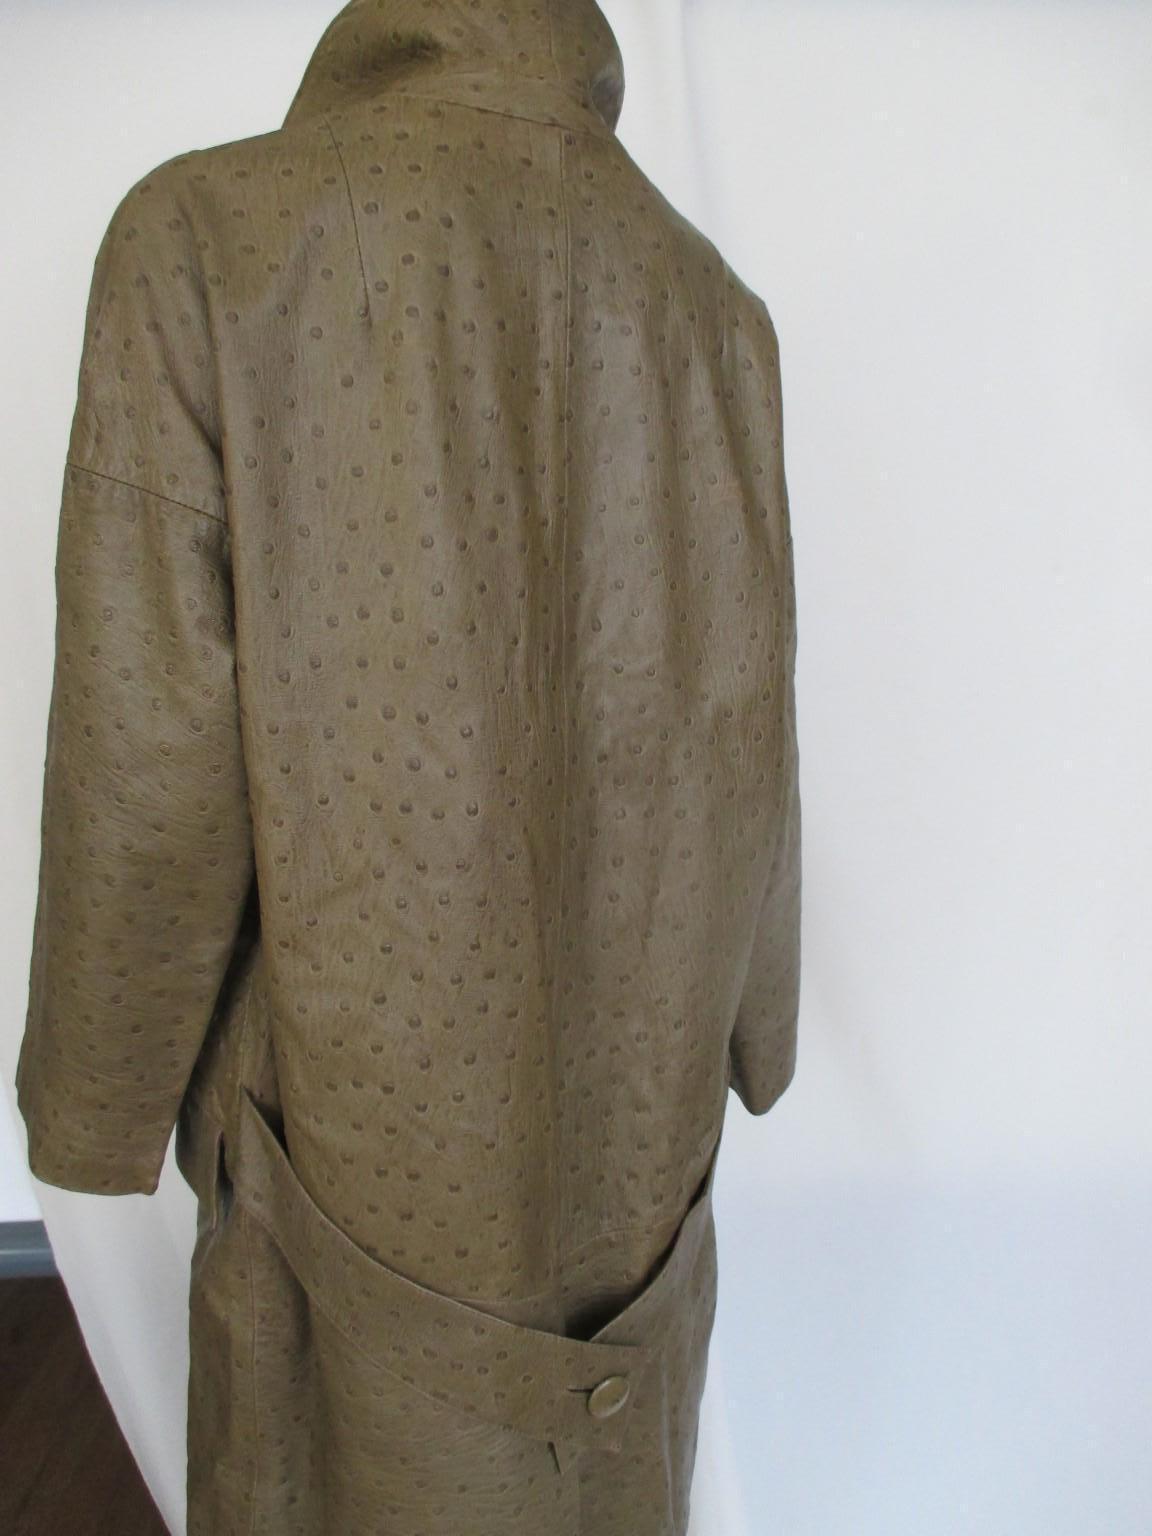 ostrich leather jacket